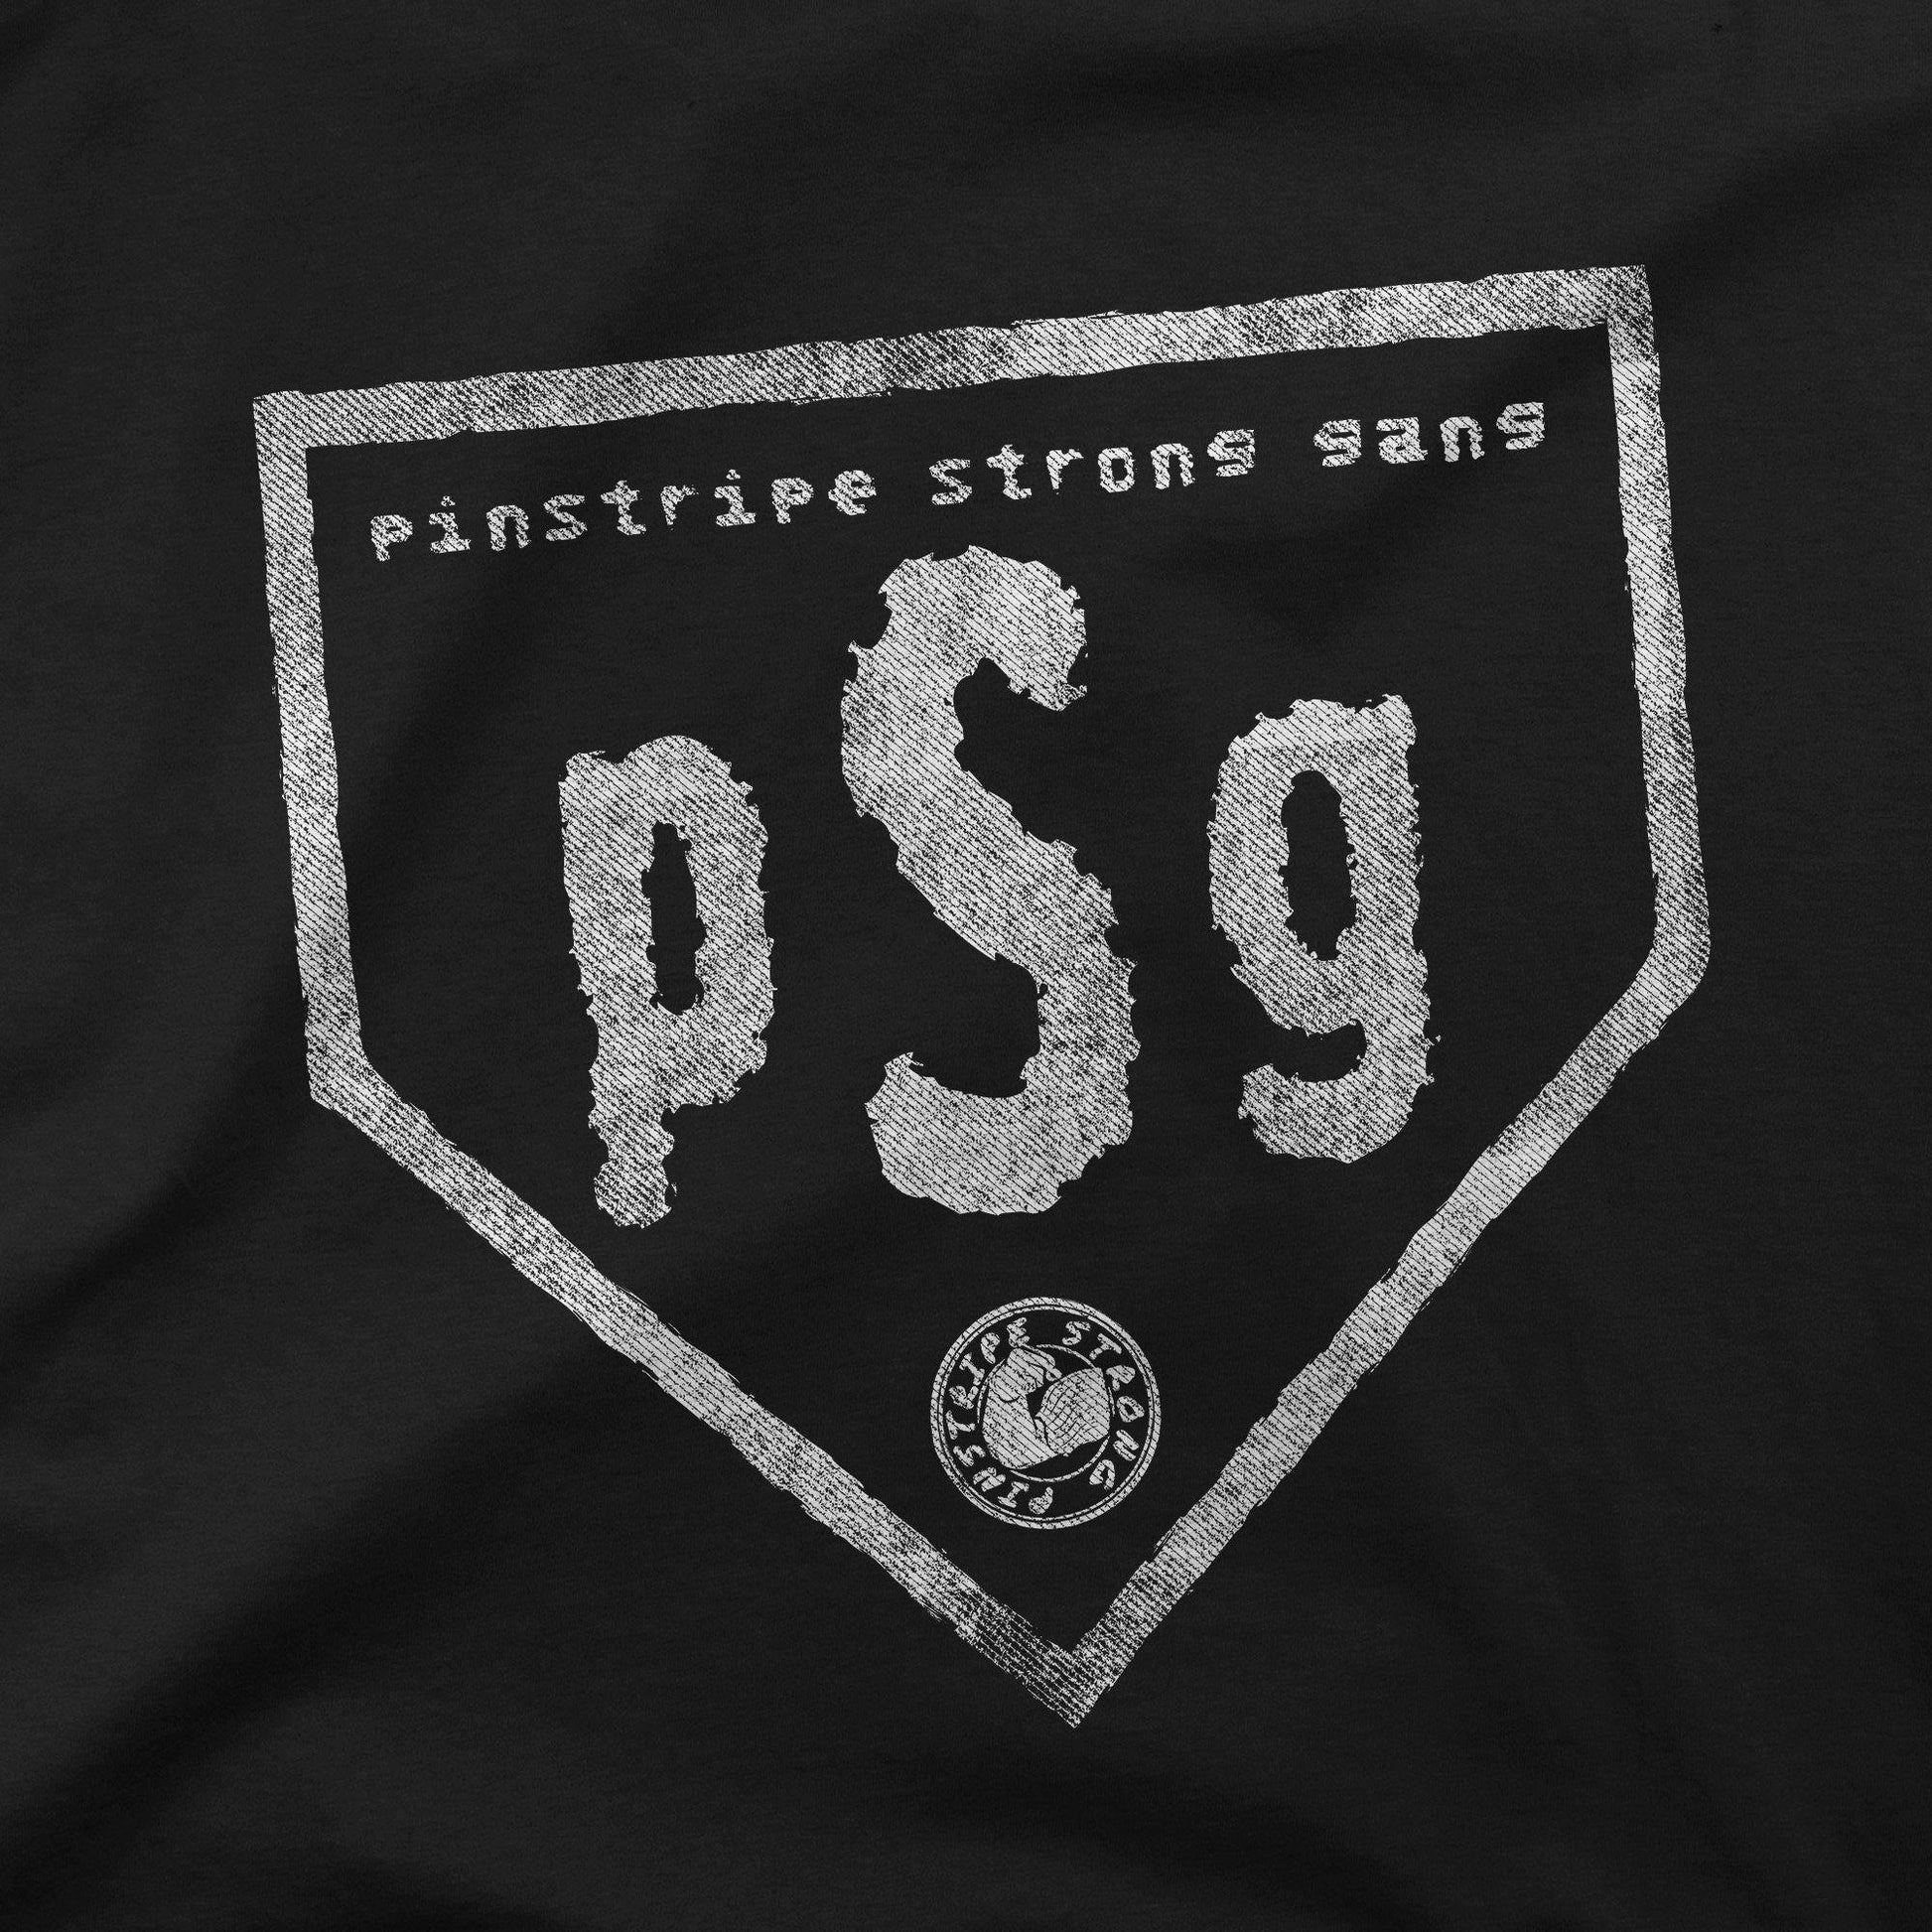 PSG | Pinstripe Strong Gang | T-Shirt - Jomboy Media